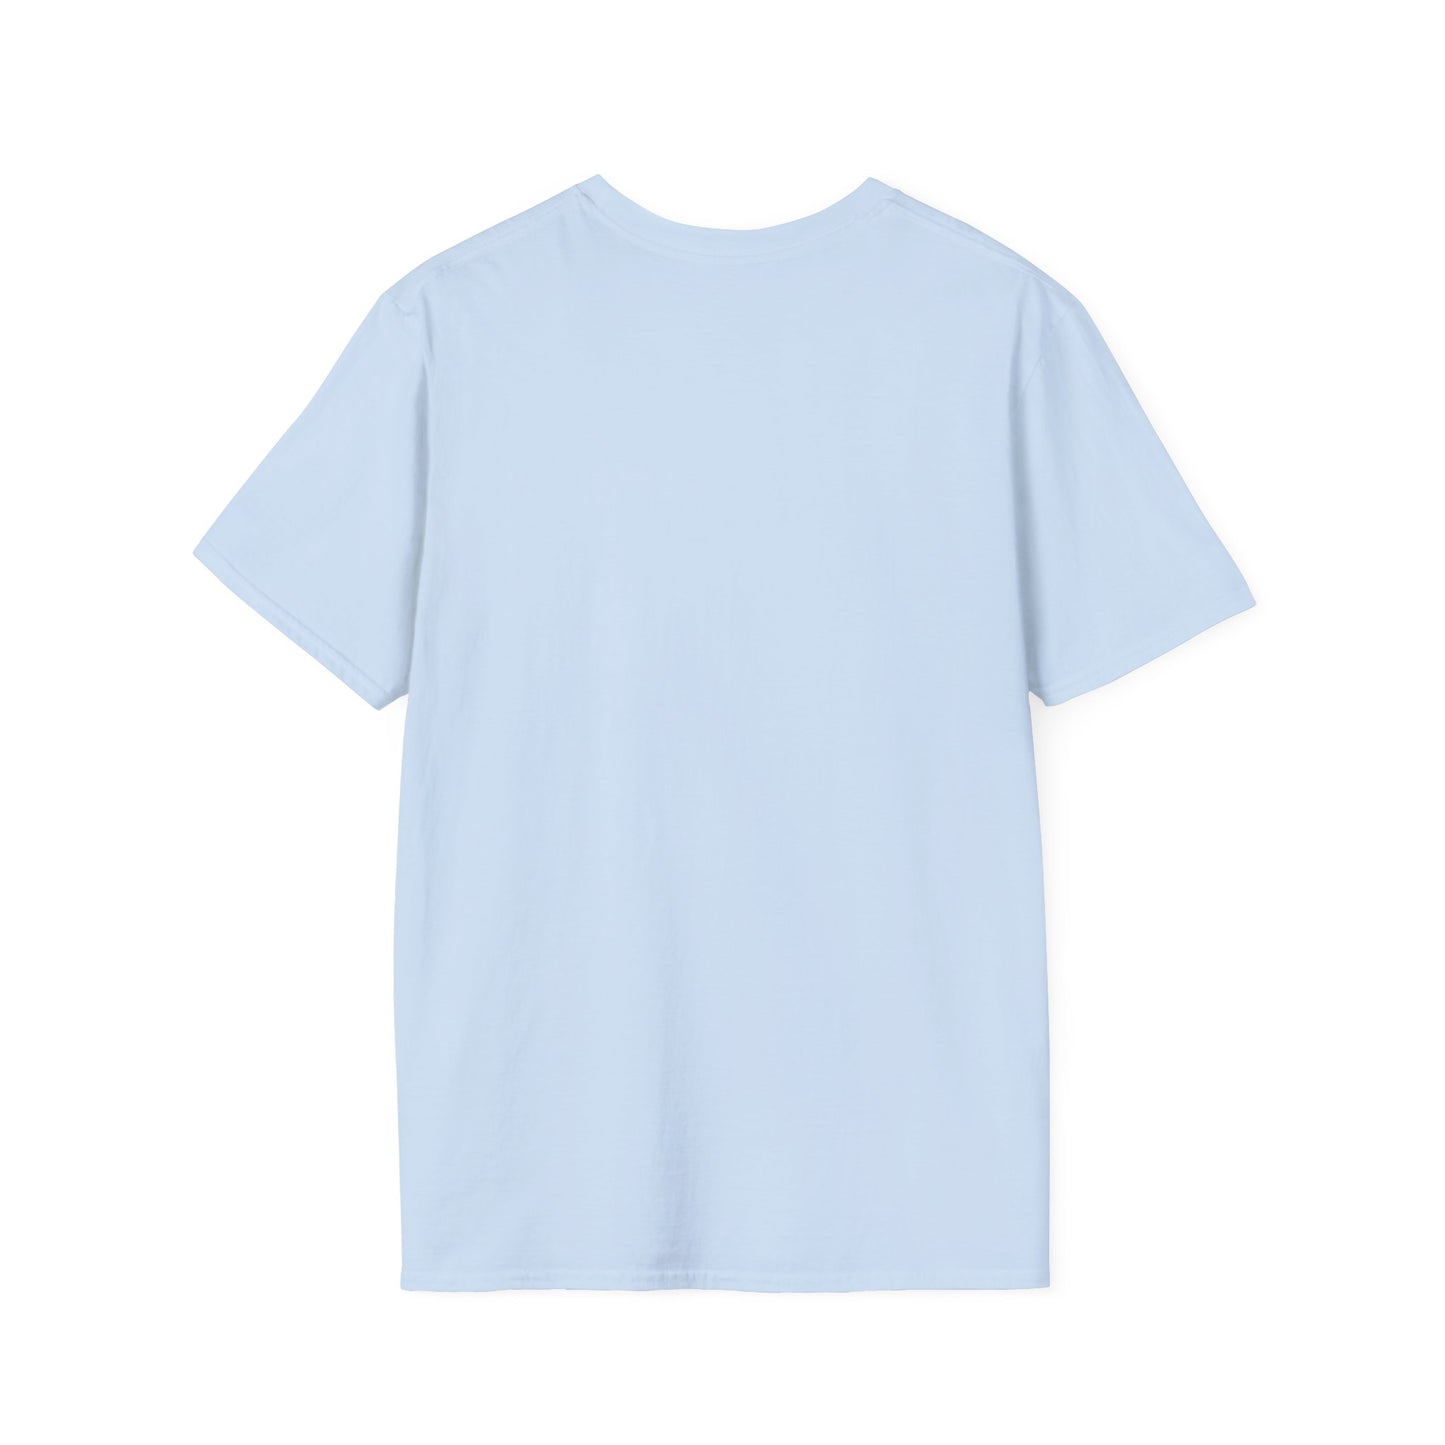 Dreidel Bowl Unisex Softstyle T-Shirt